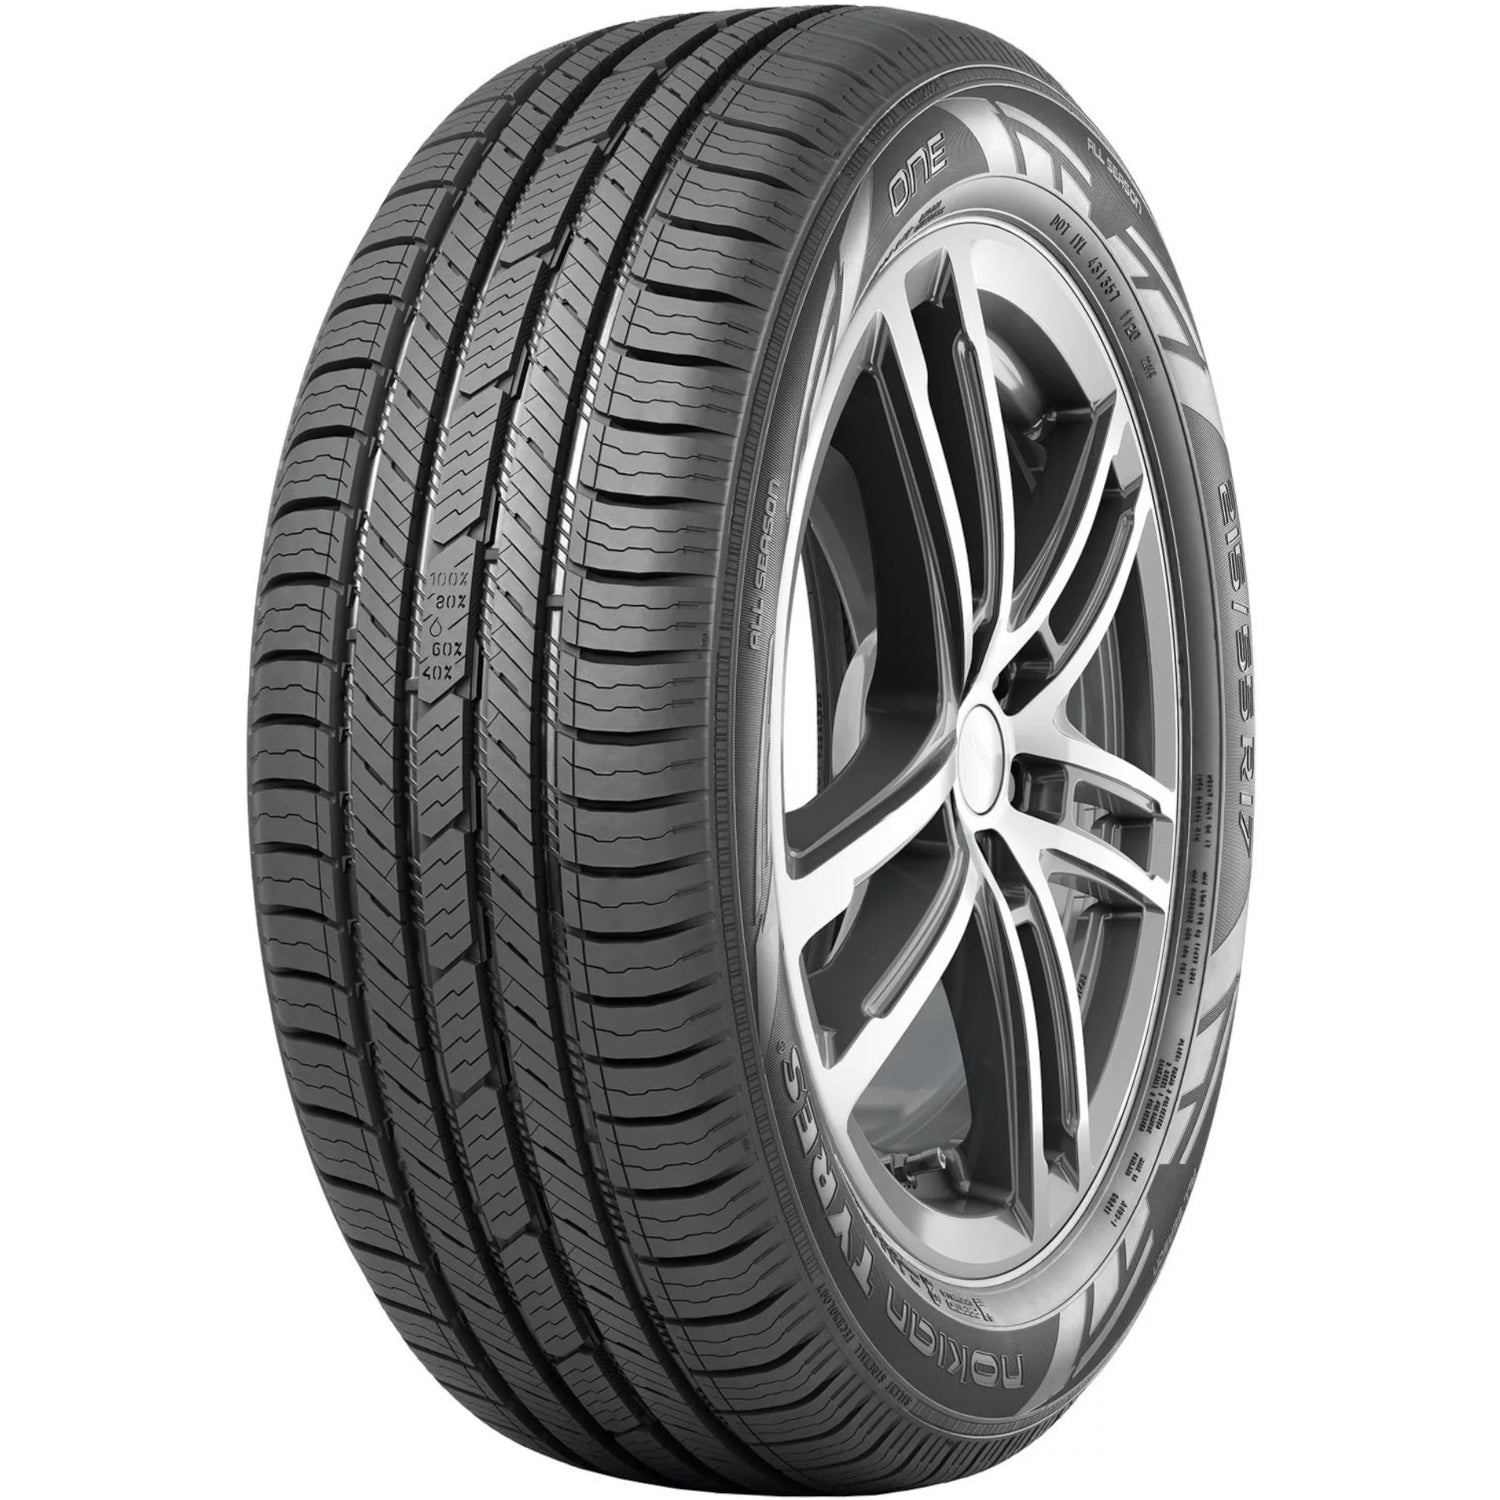 NOKIAN ONE 235/65R16 (28X9.3R 16) Tires